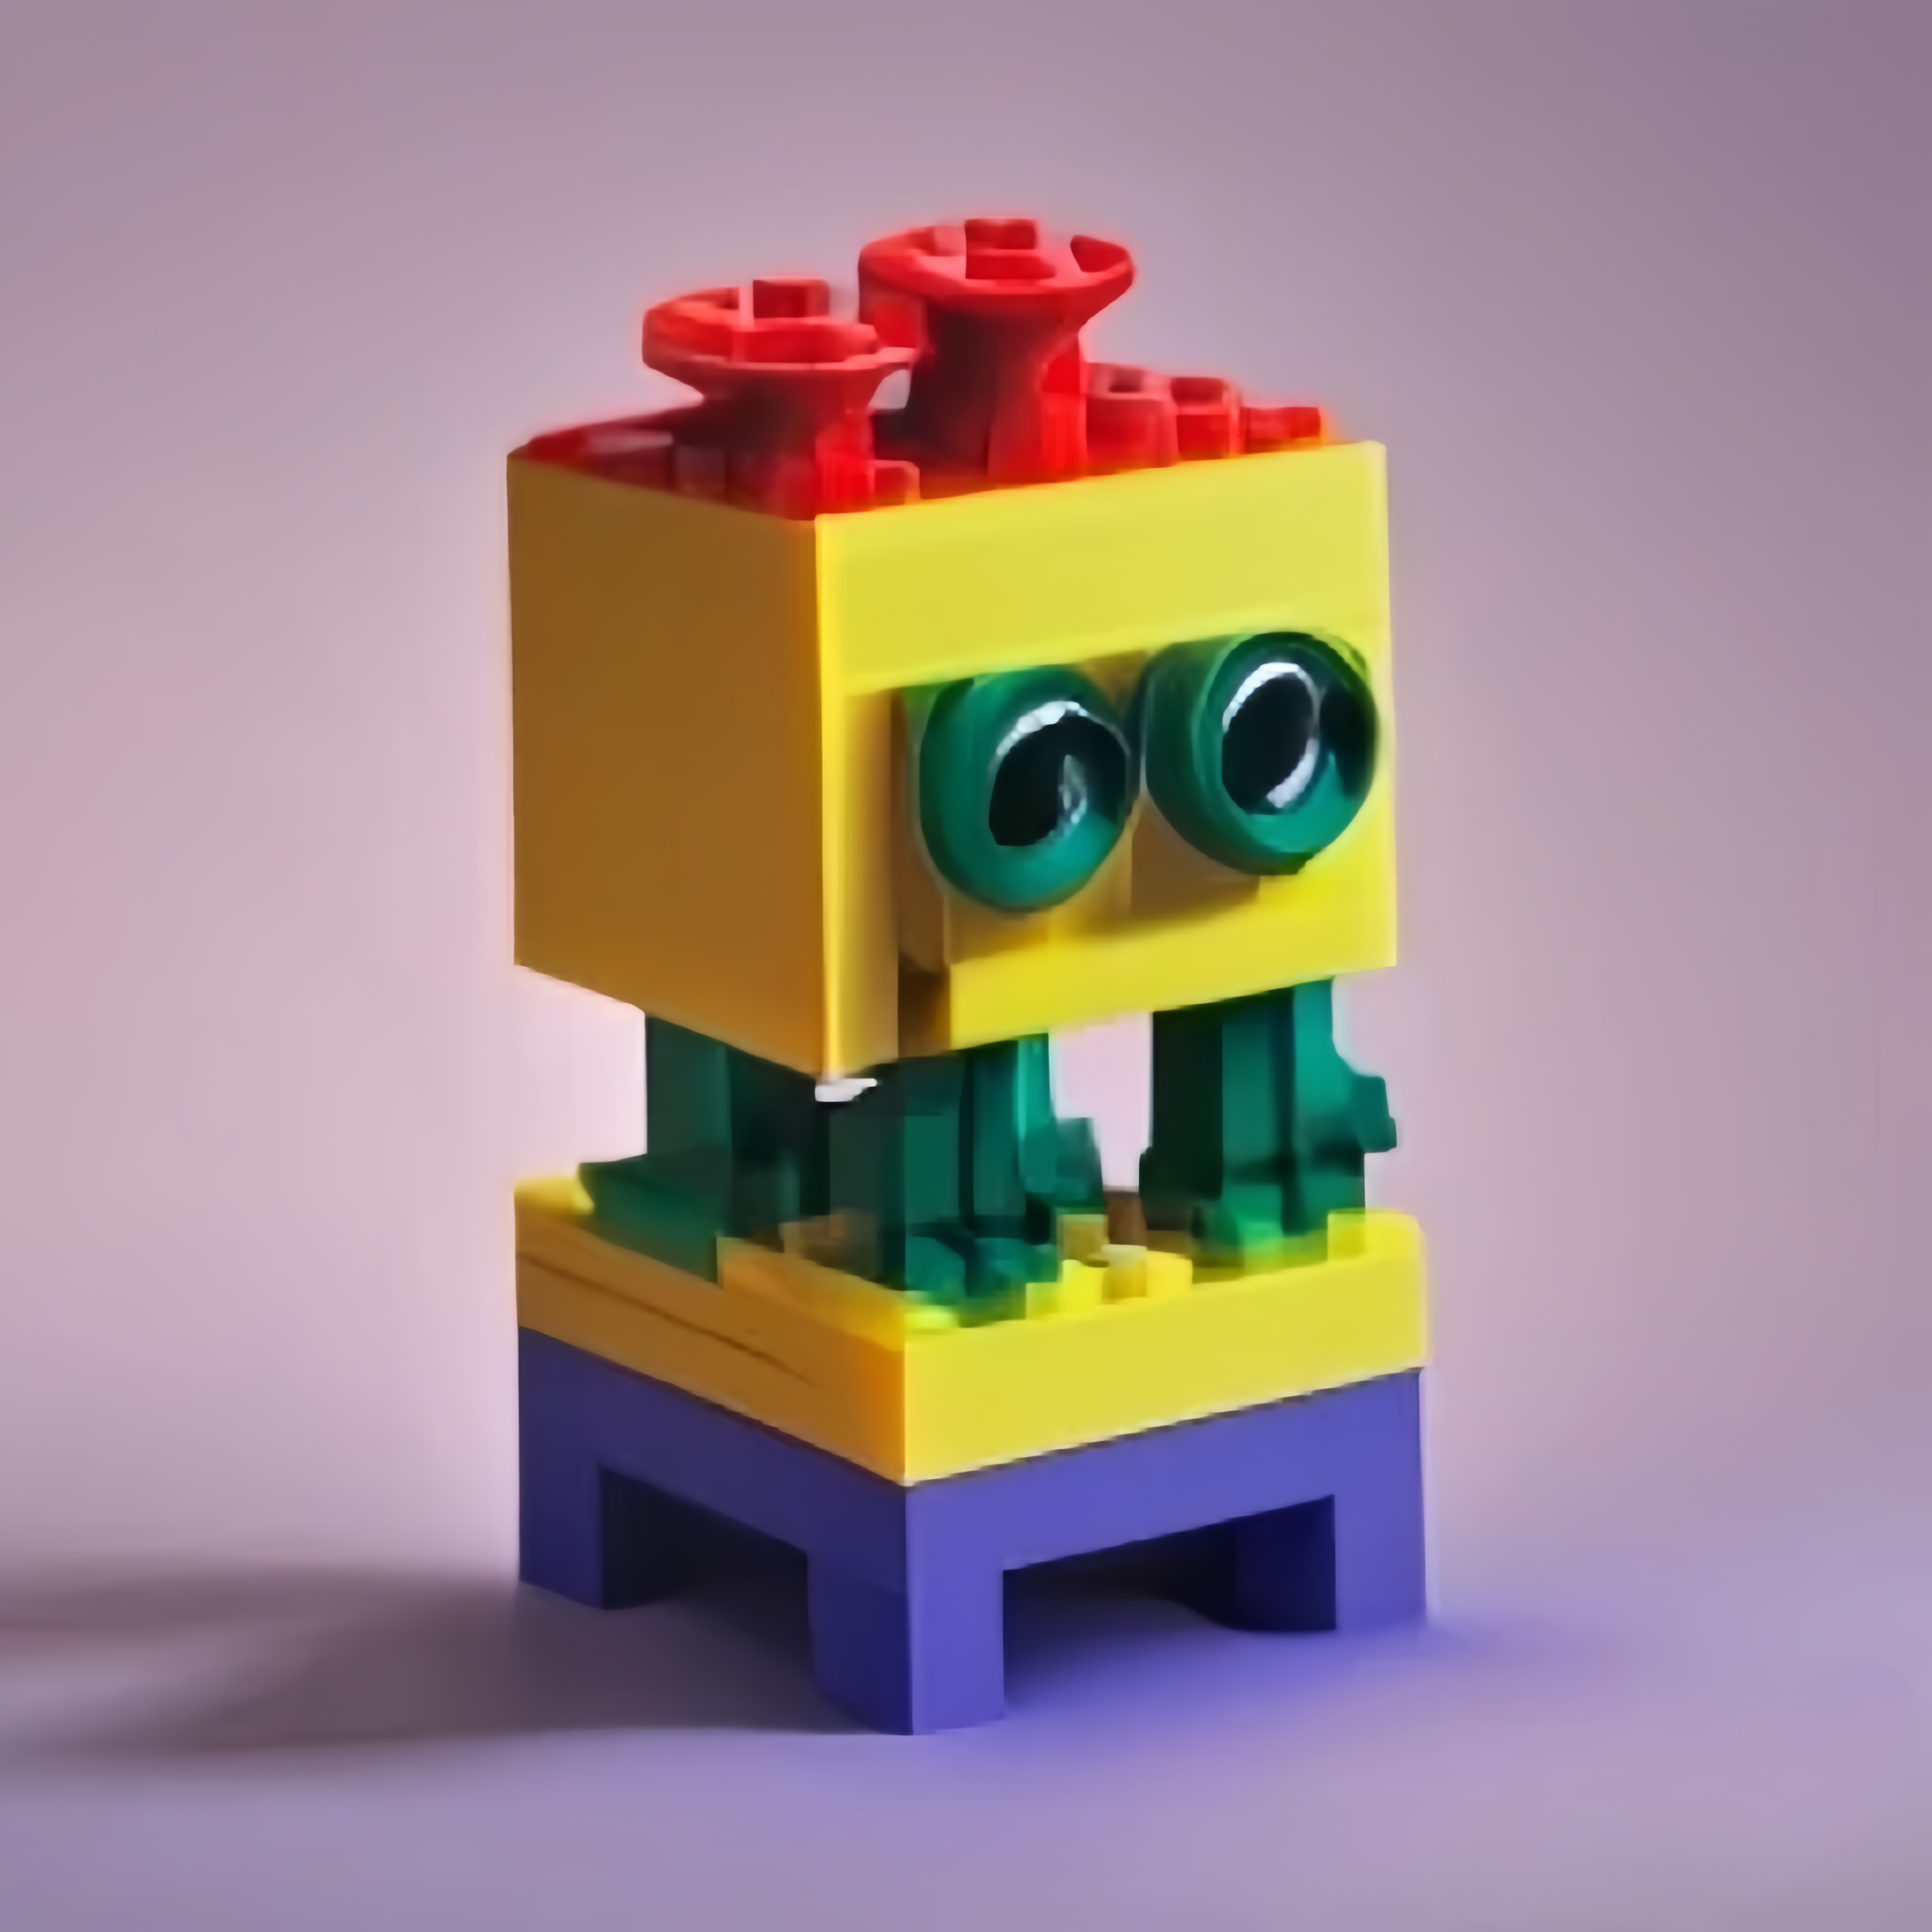 3D Printed Lego